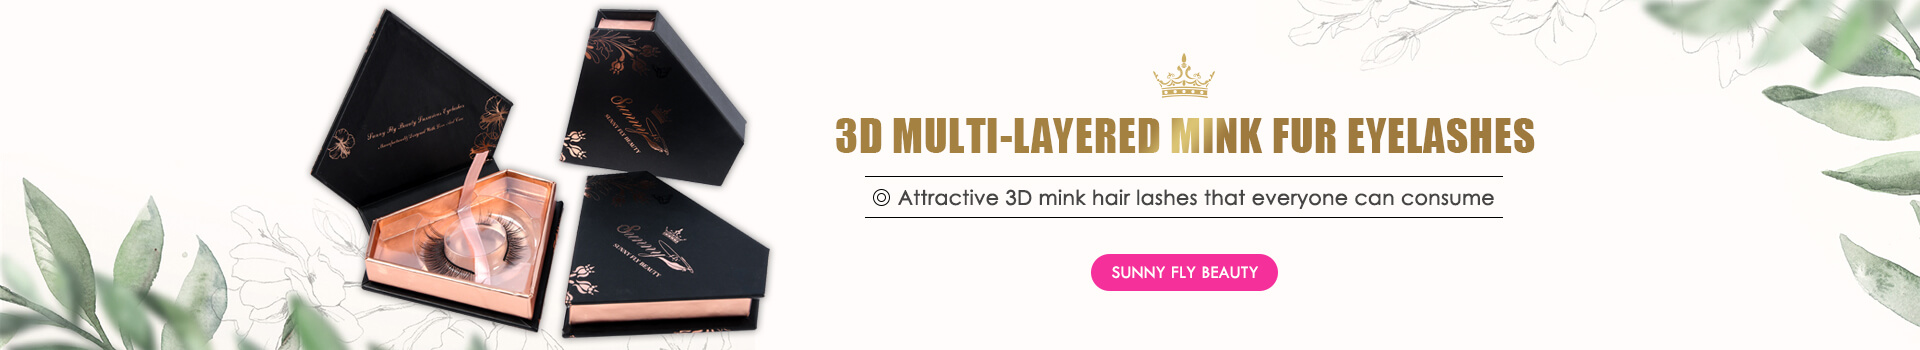 3D Multi-layered Mink Fur Eyelashes MG04